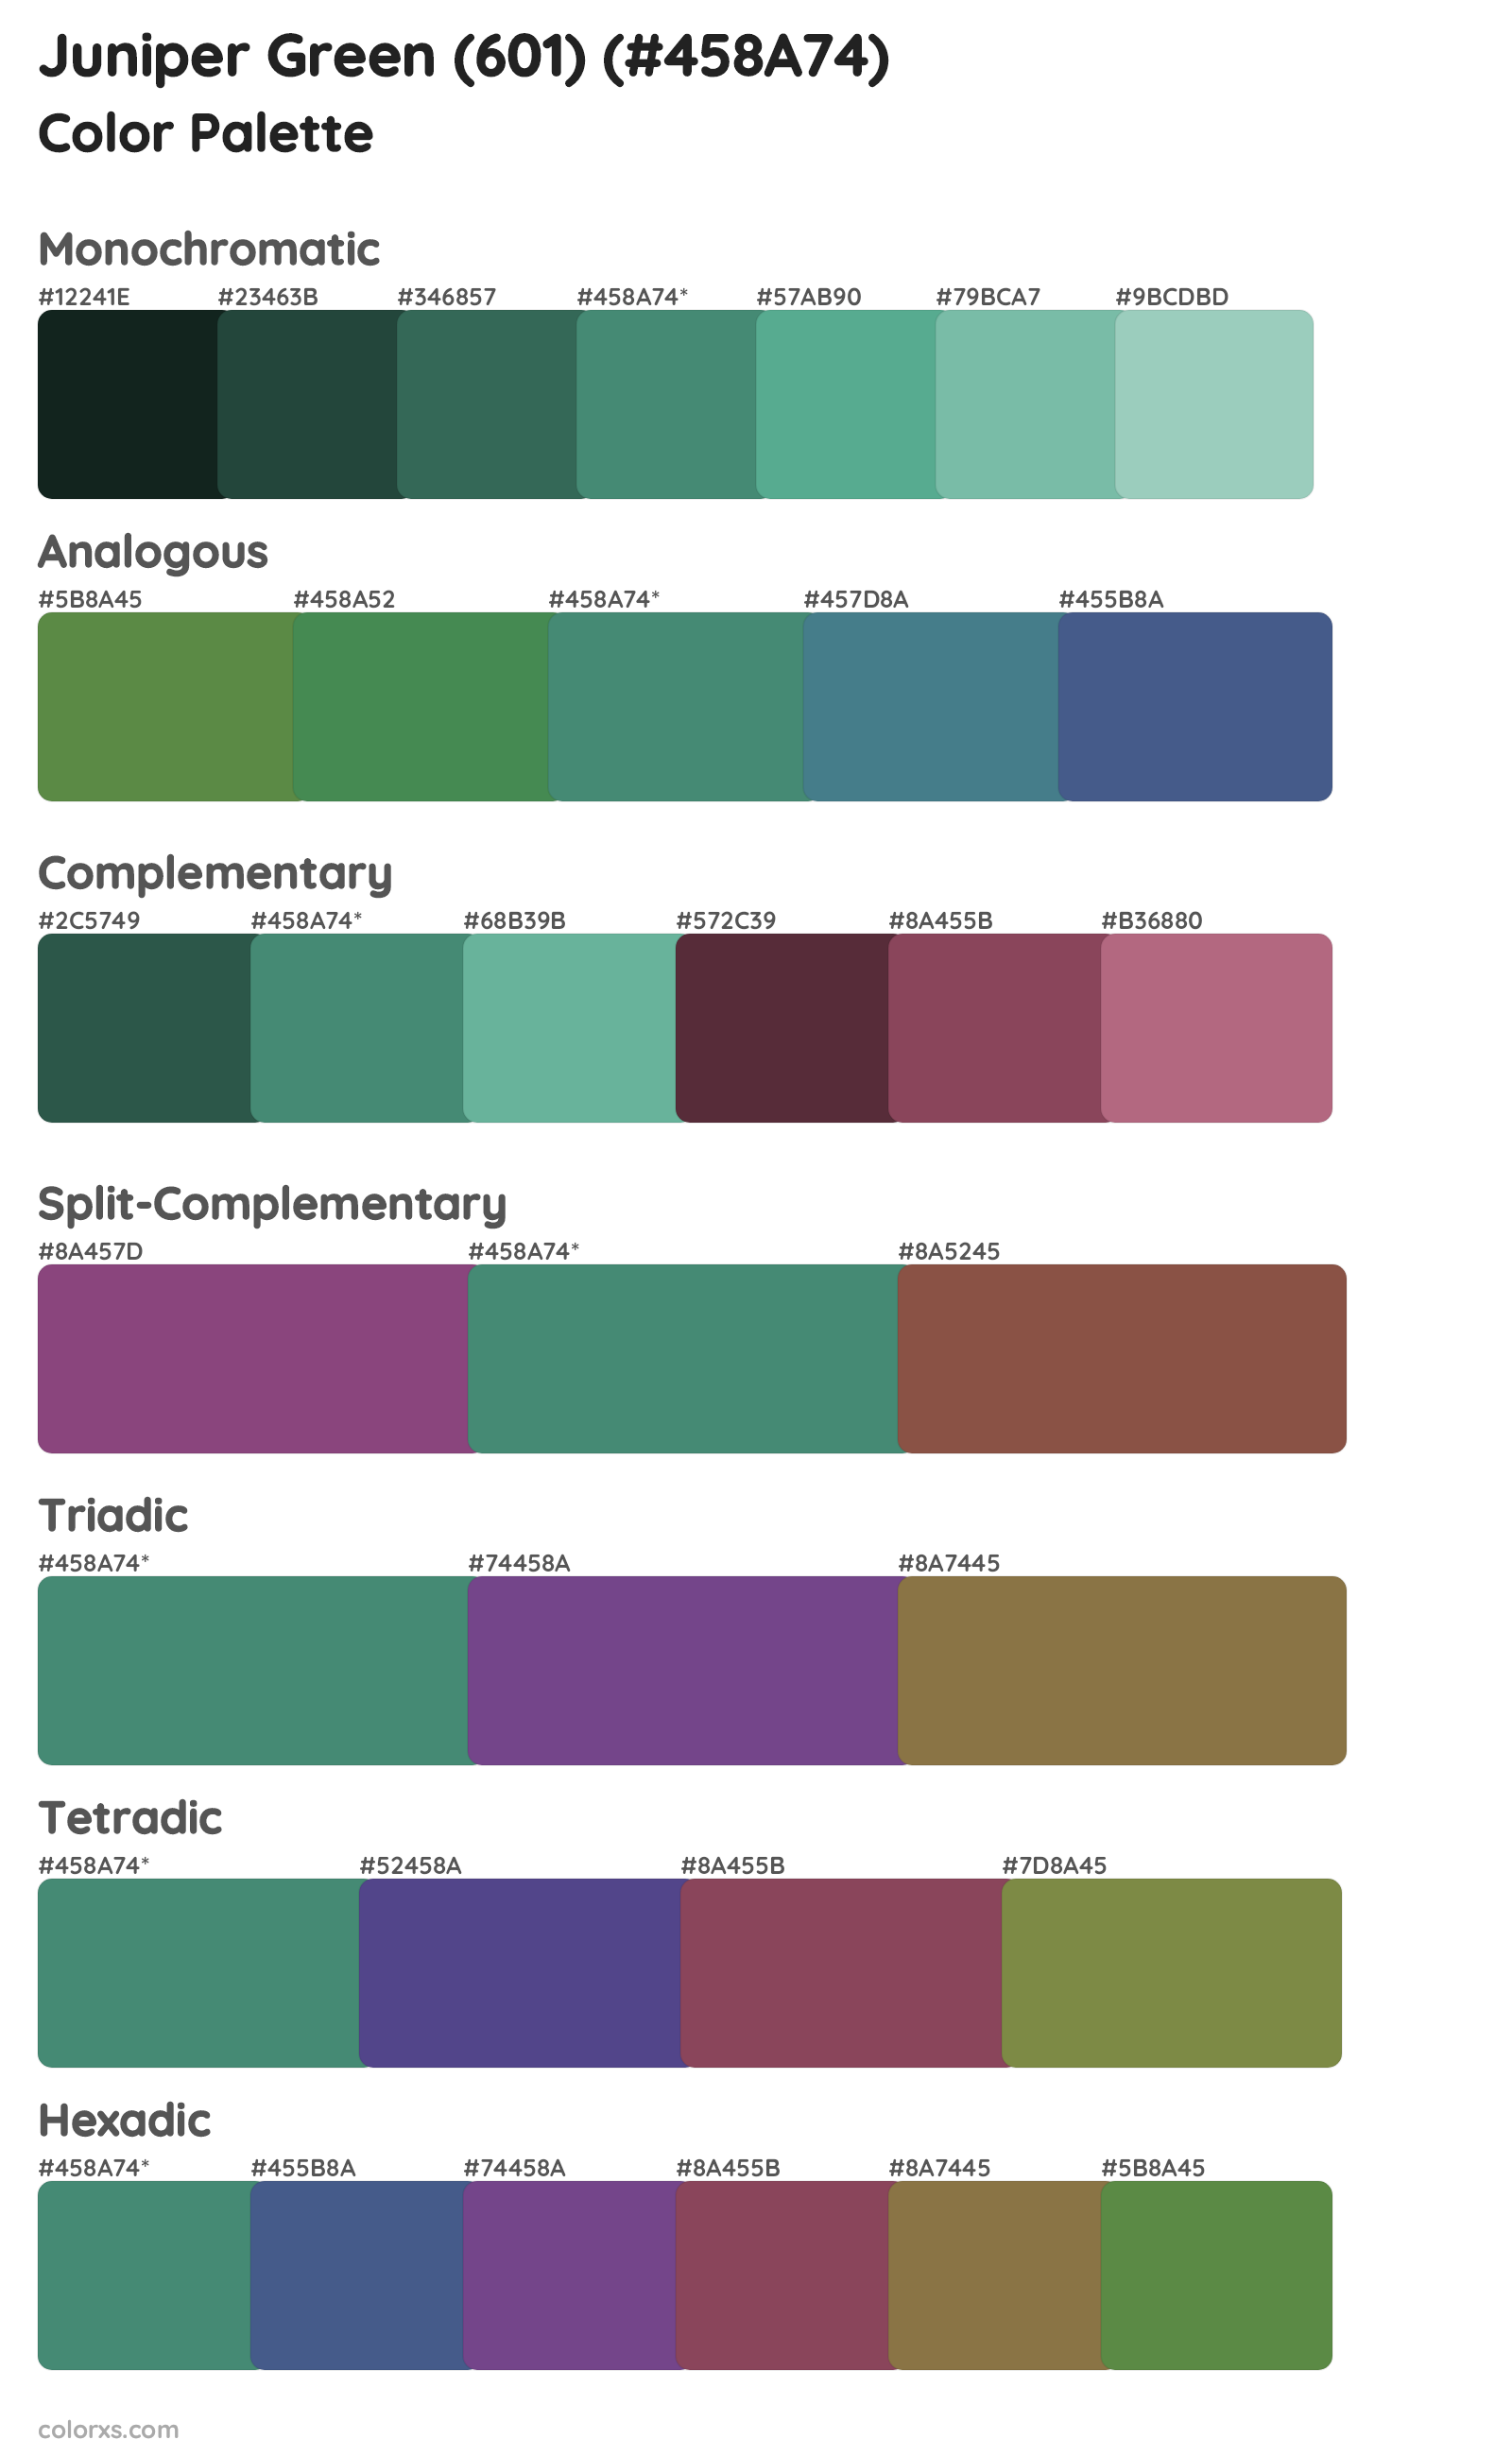 Juniper Green (601) Color Scheme Palettes